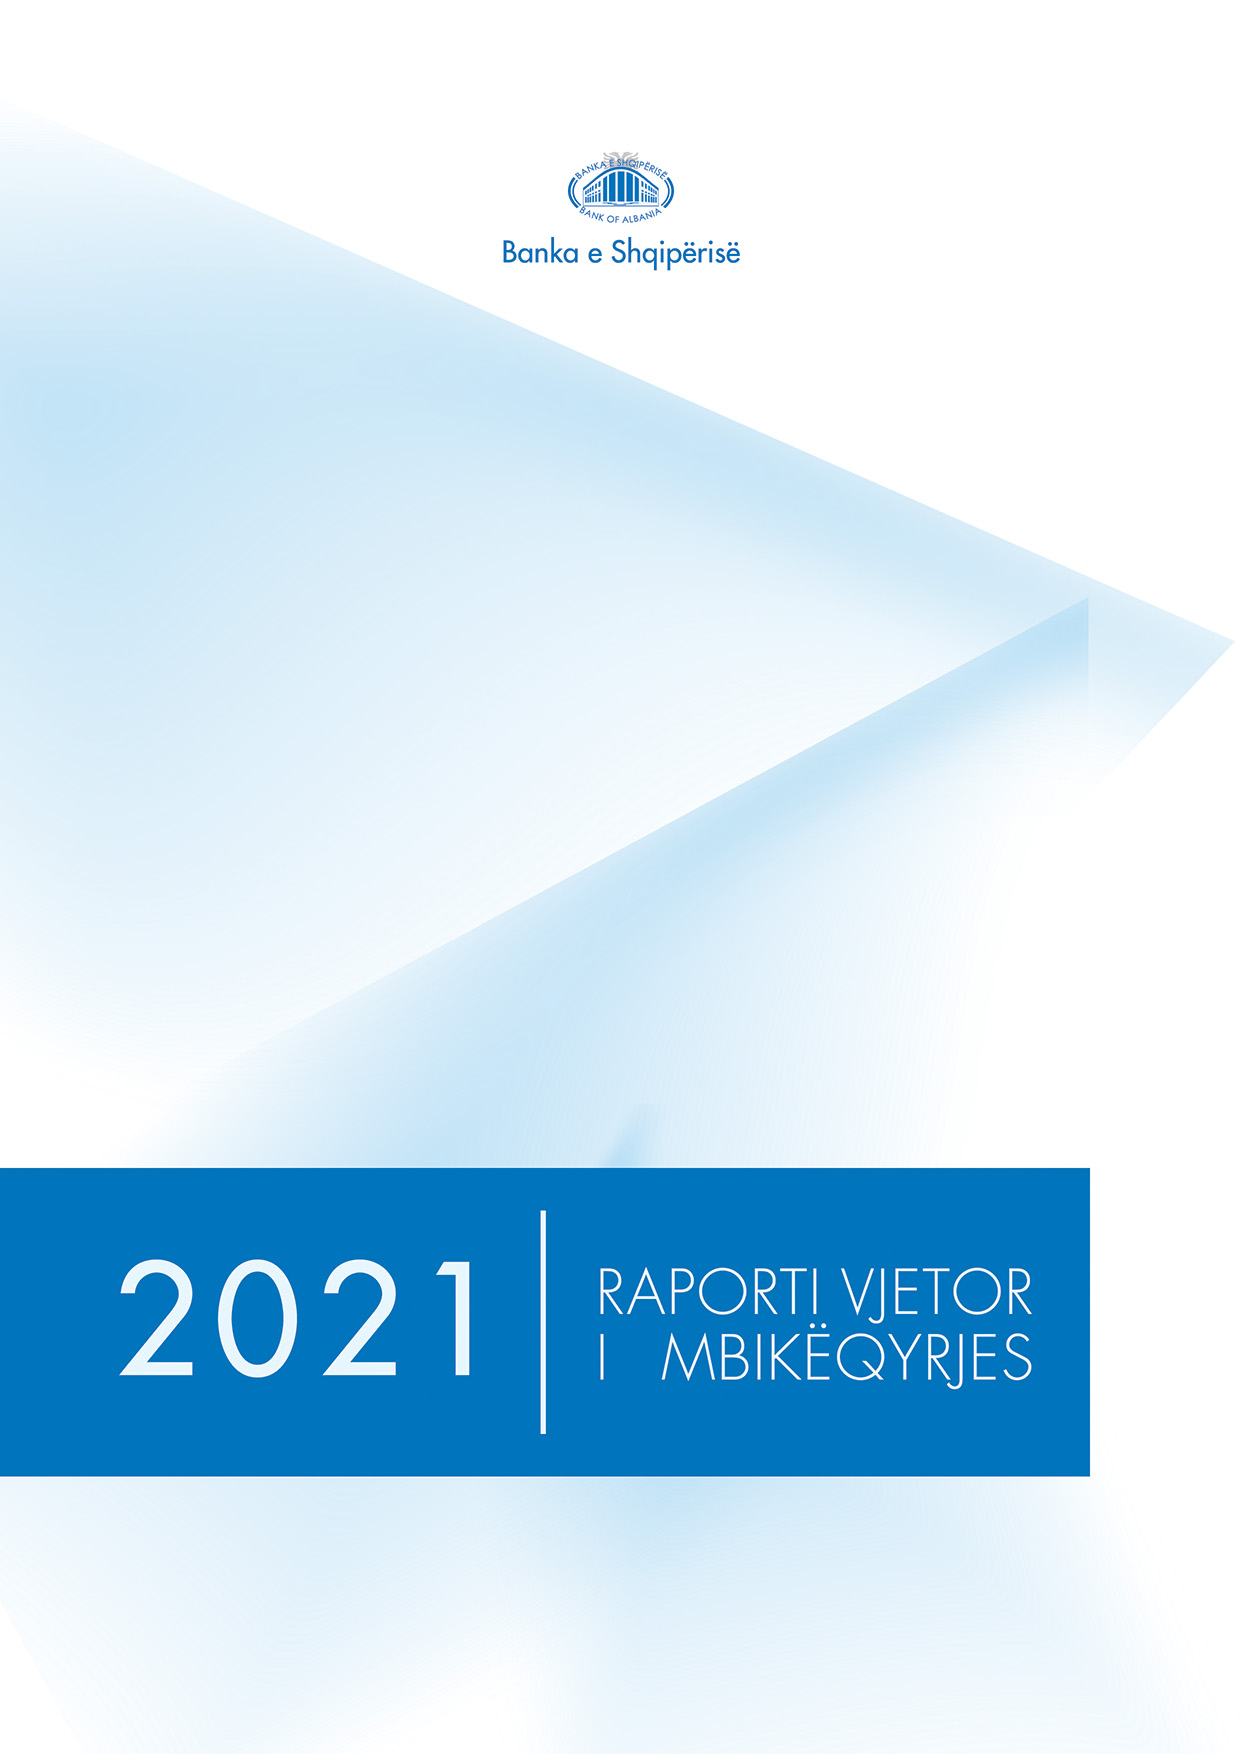 Raporti Vjetor i Mbikëqyrjes 2021